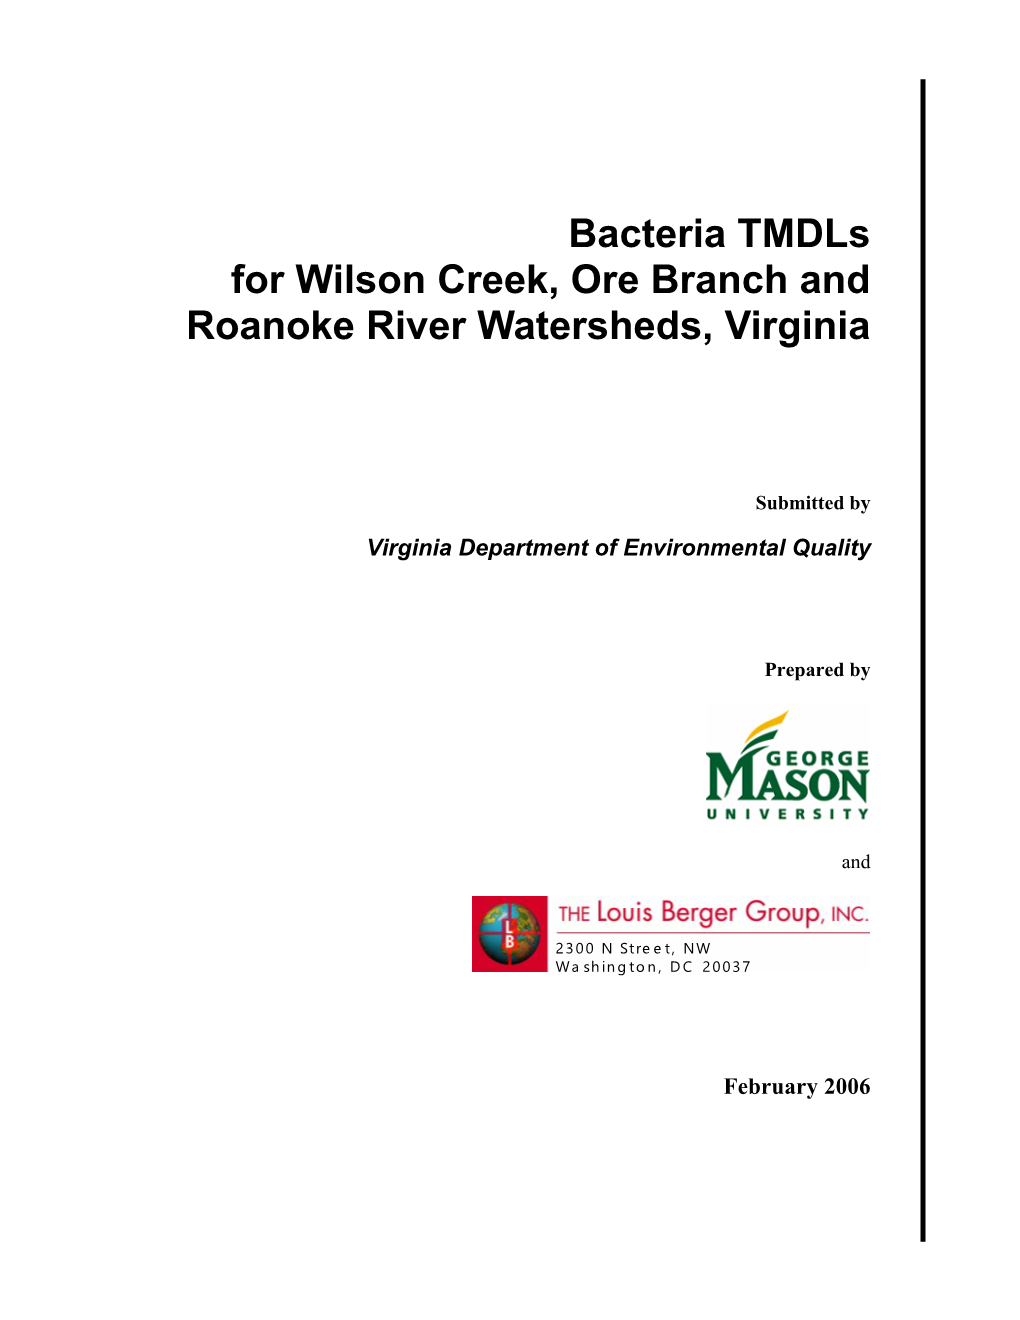 Bacteria Tmdls for Wilson Creek, Ore Branch and Roanoke River Watersheds, Virginia